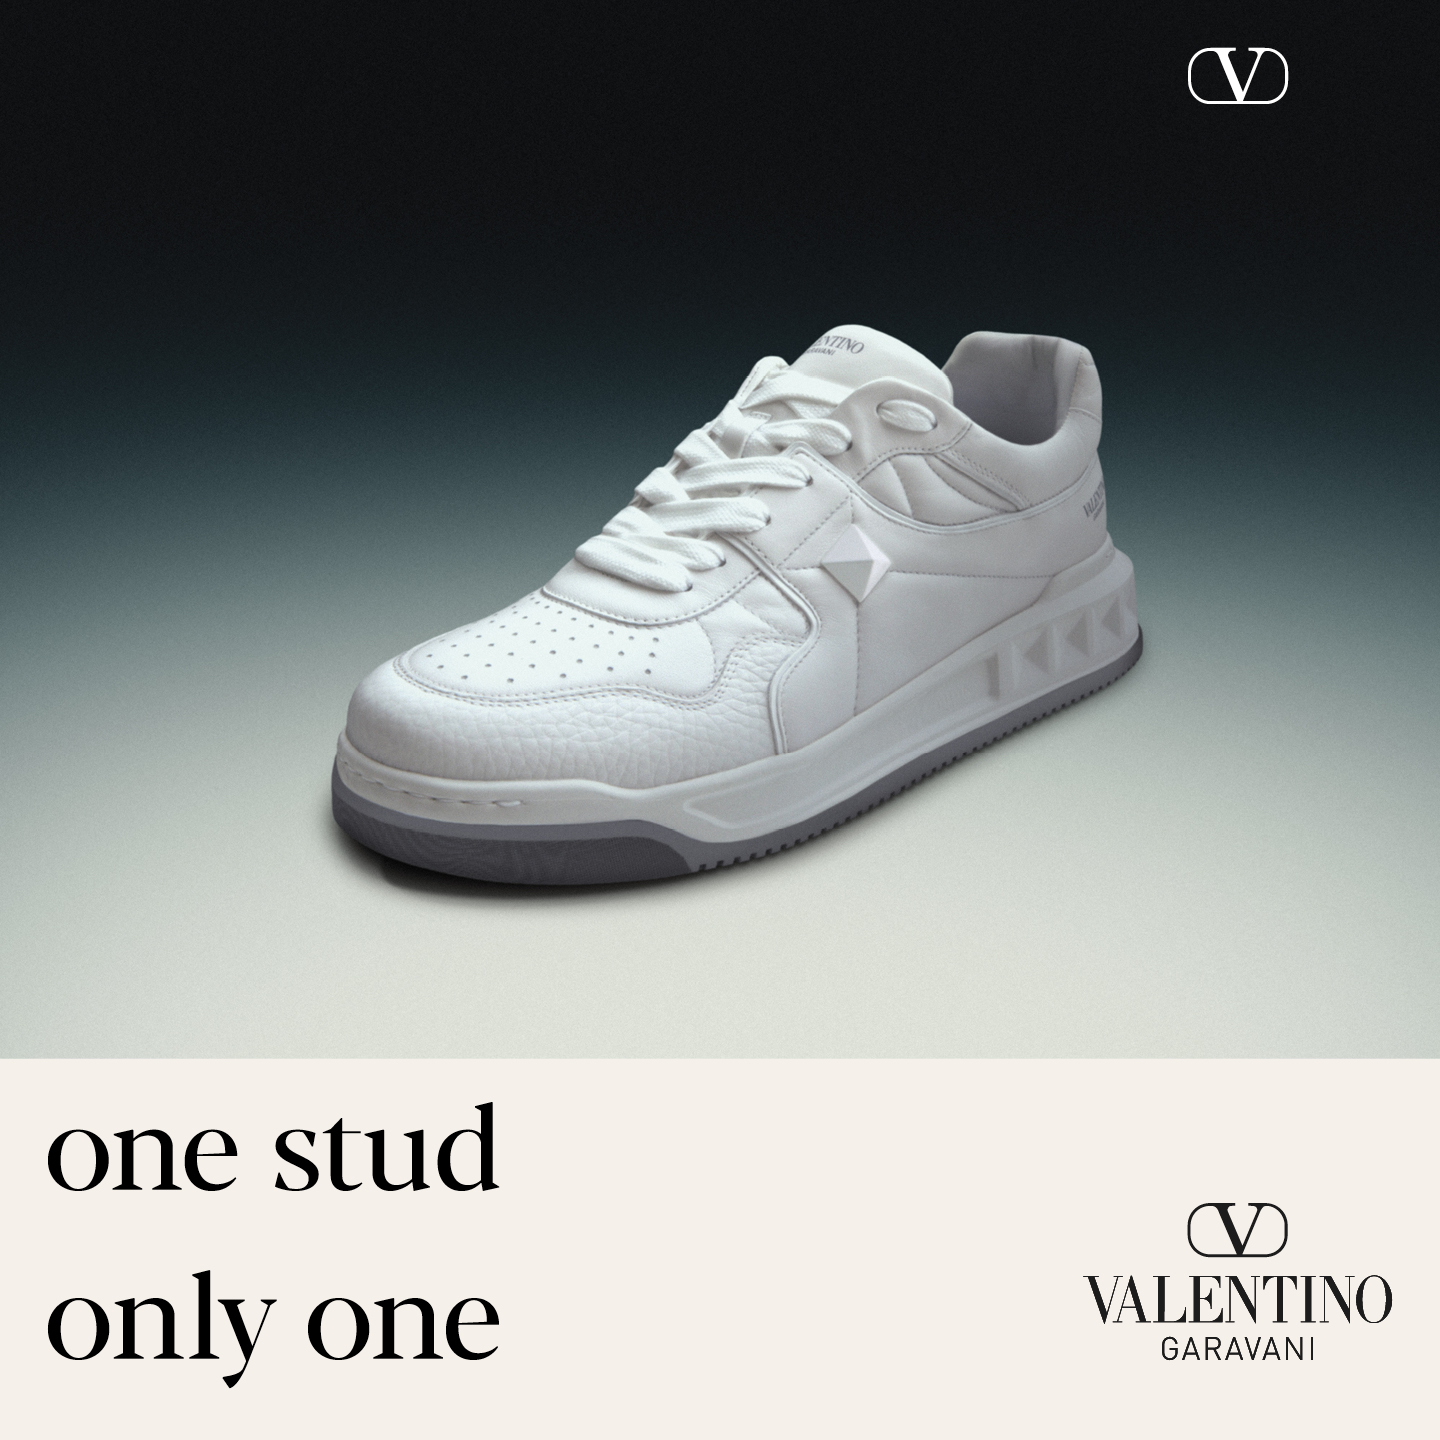 VALENTINO GARAVANIの新作スニーカー『ONE STUD』が発売開始